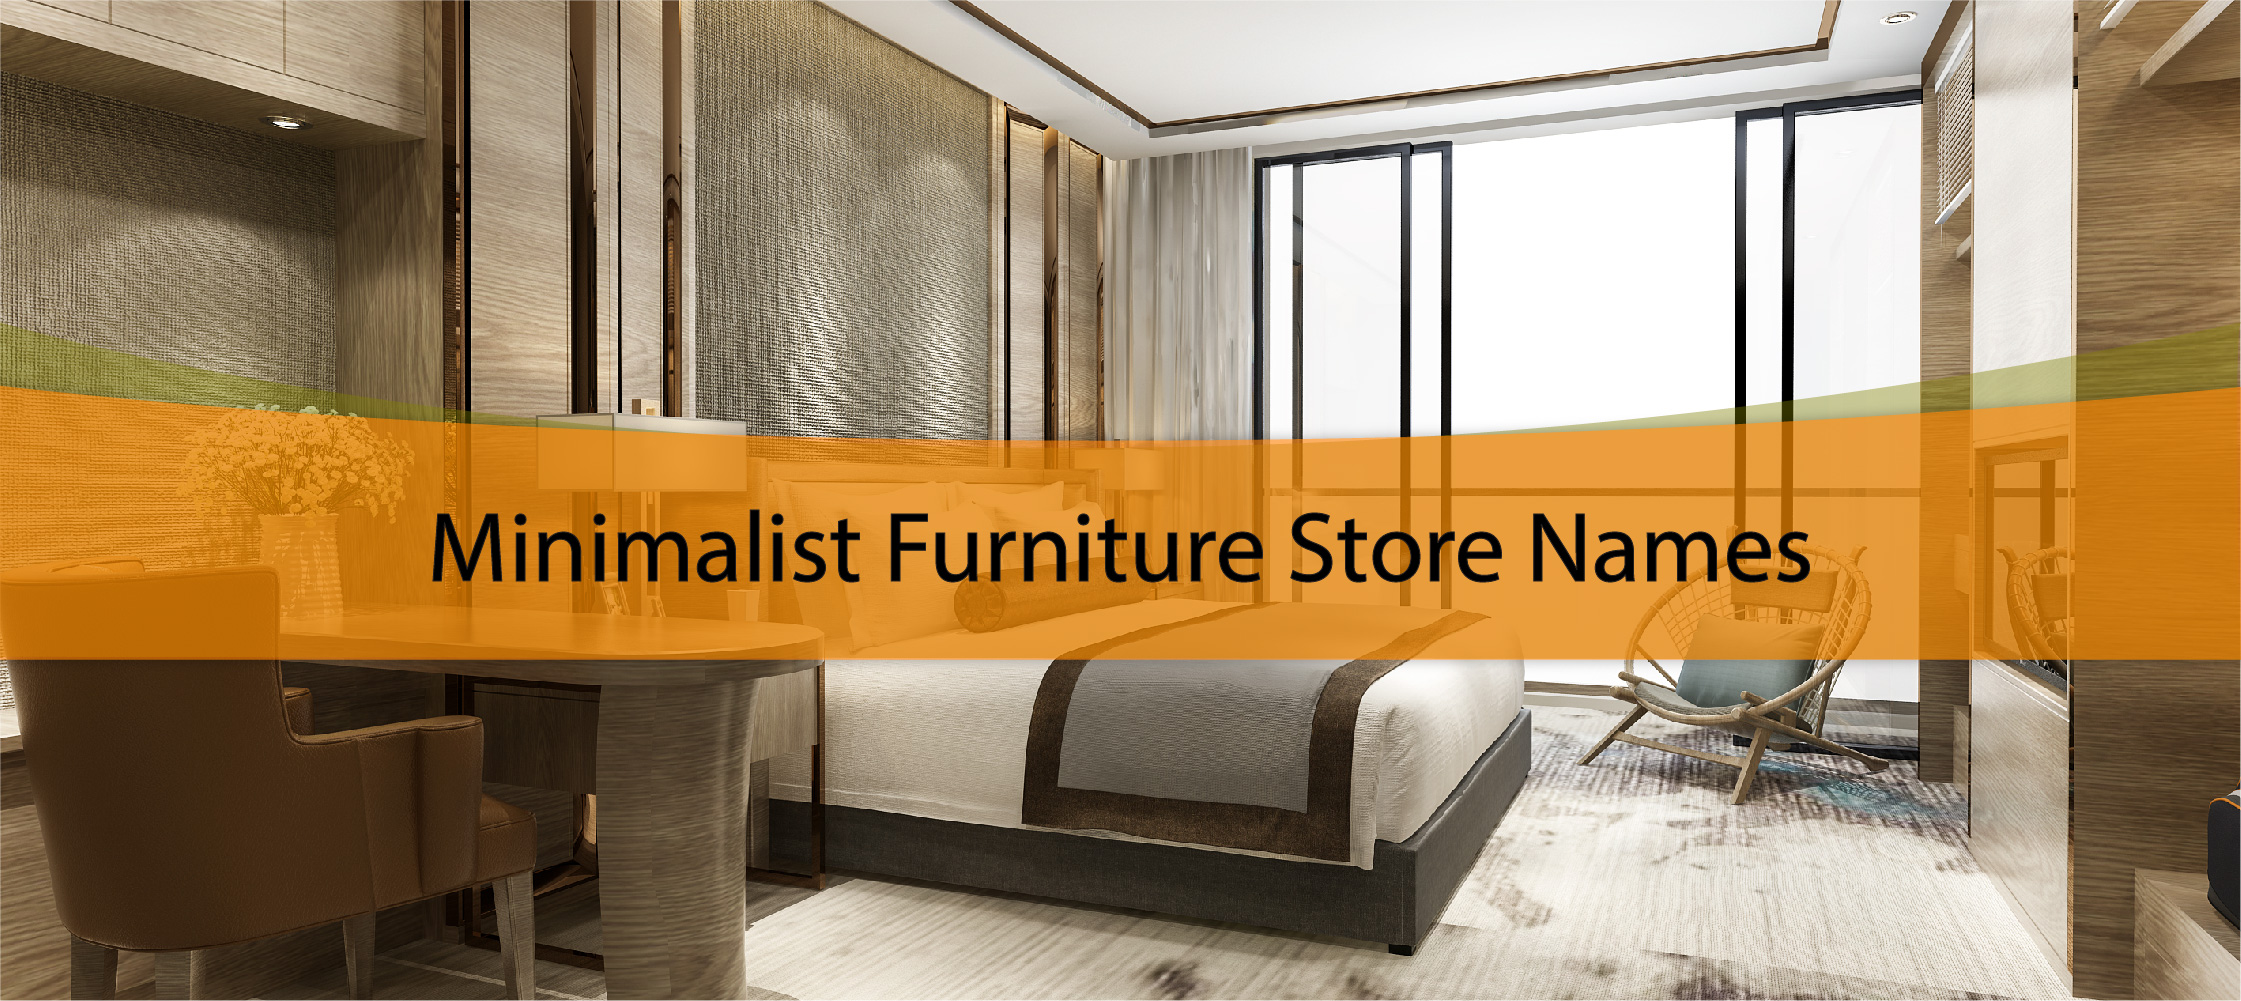 Minimalist Furniture Store Names